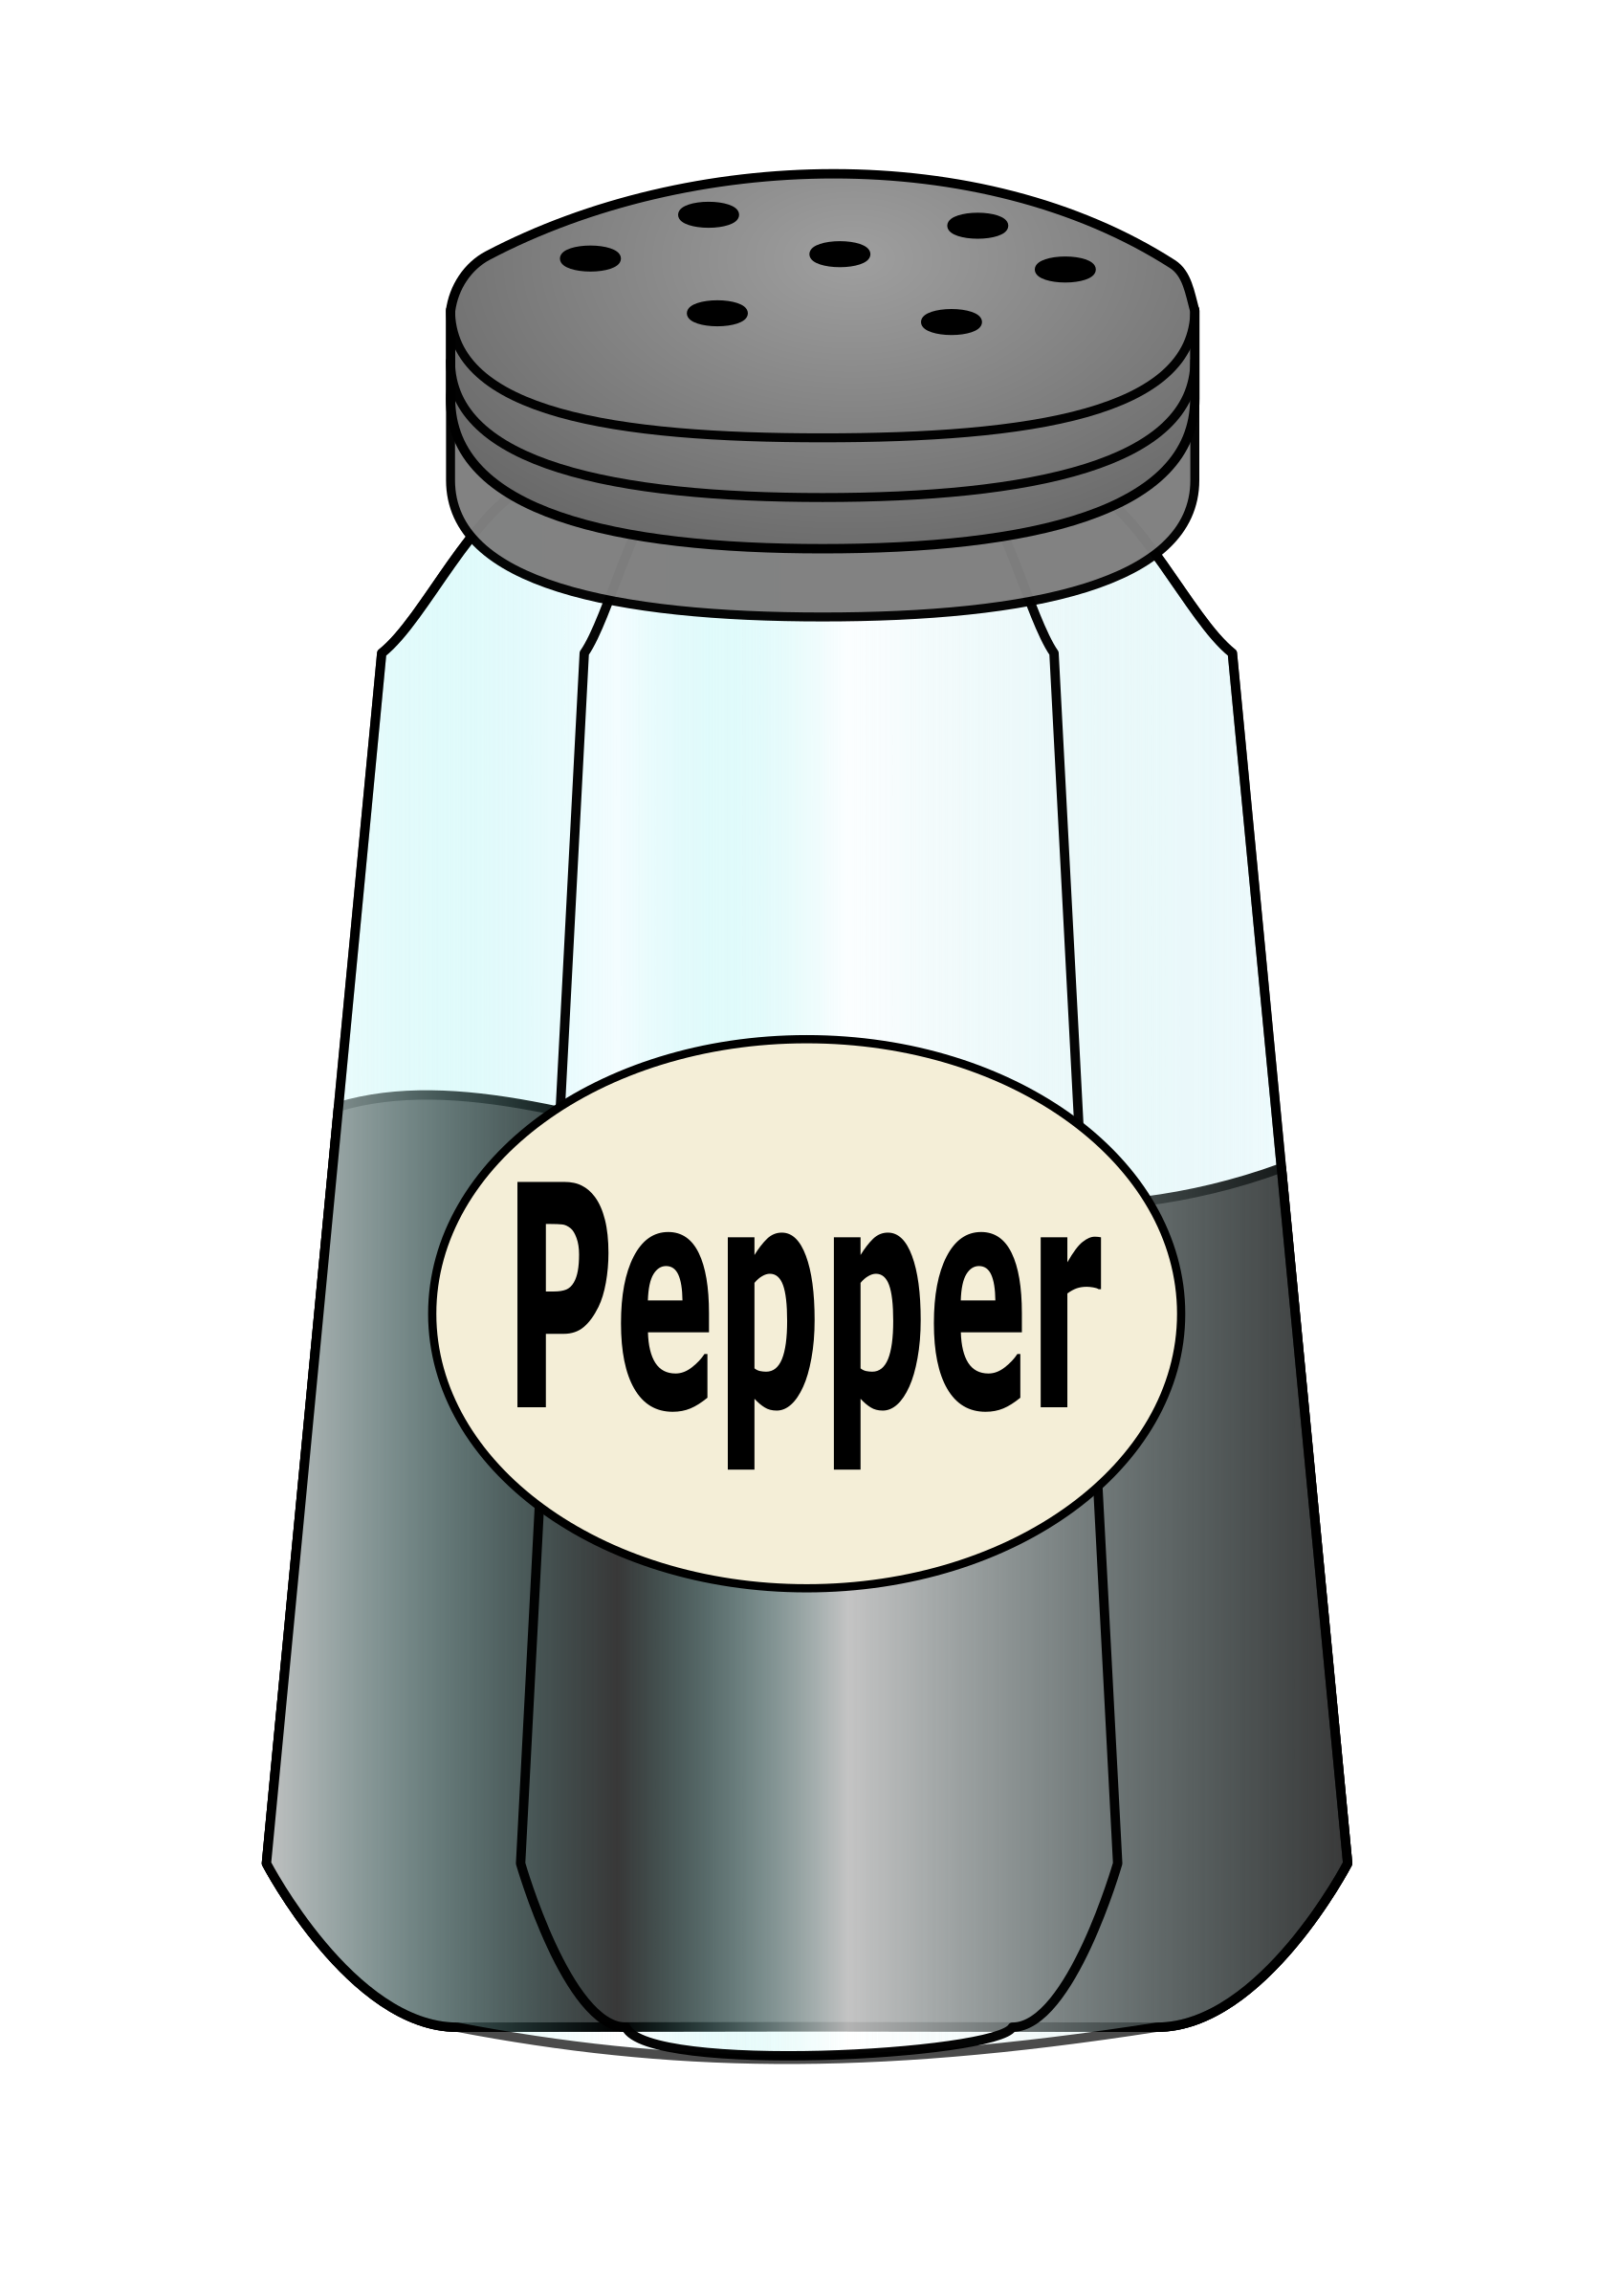 Big image png. Pepper clipart pepper shaker